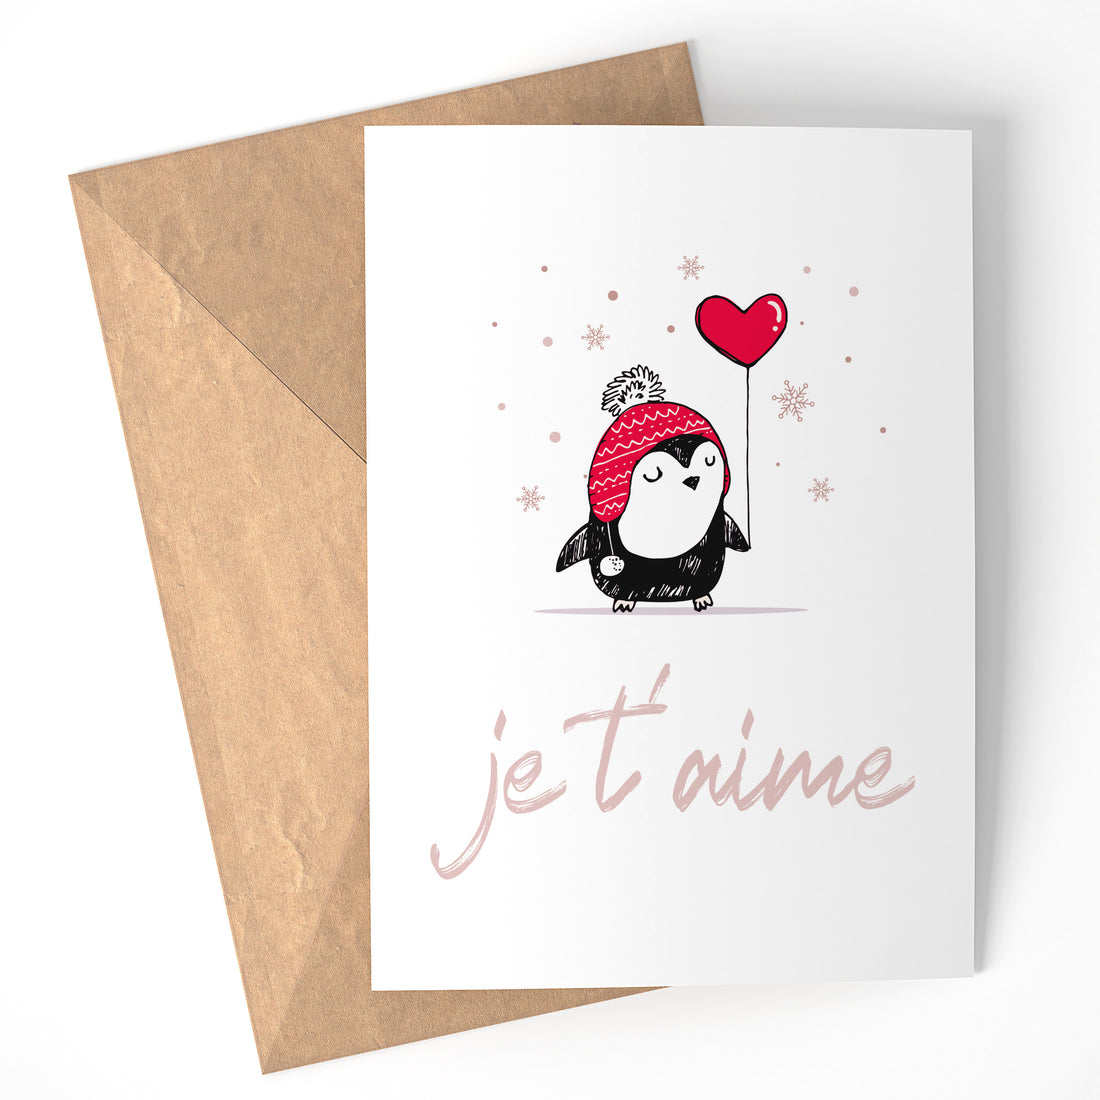 Penguin I LOVE YOU card - Printable instant download